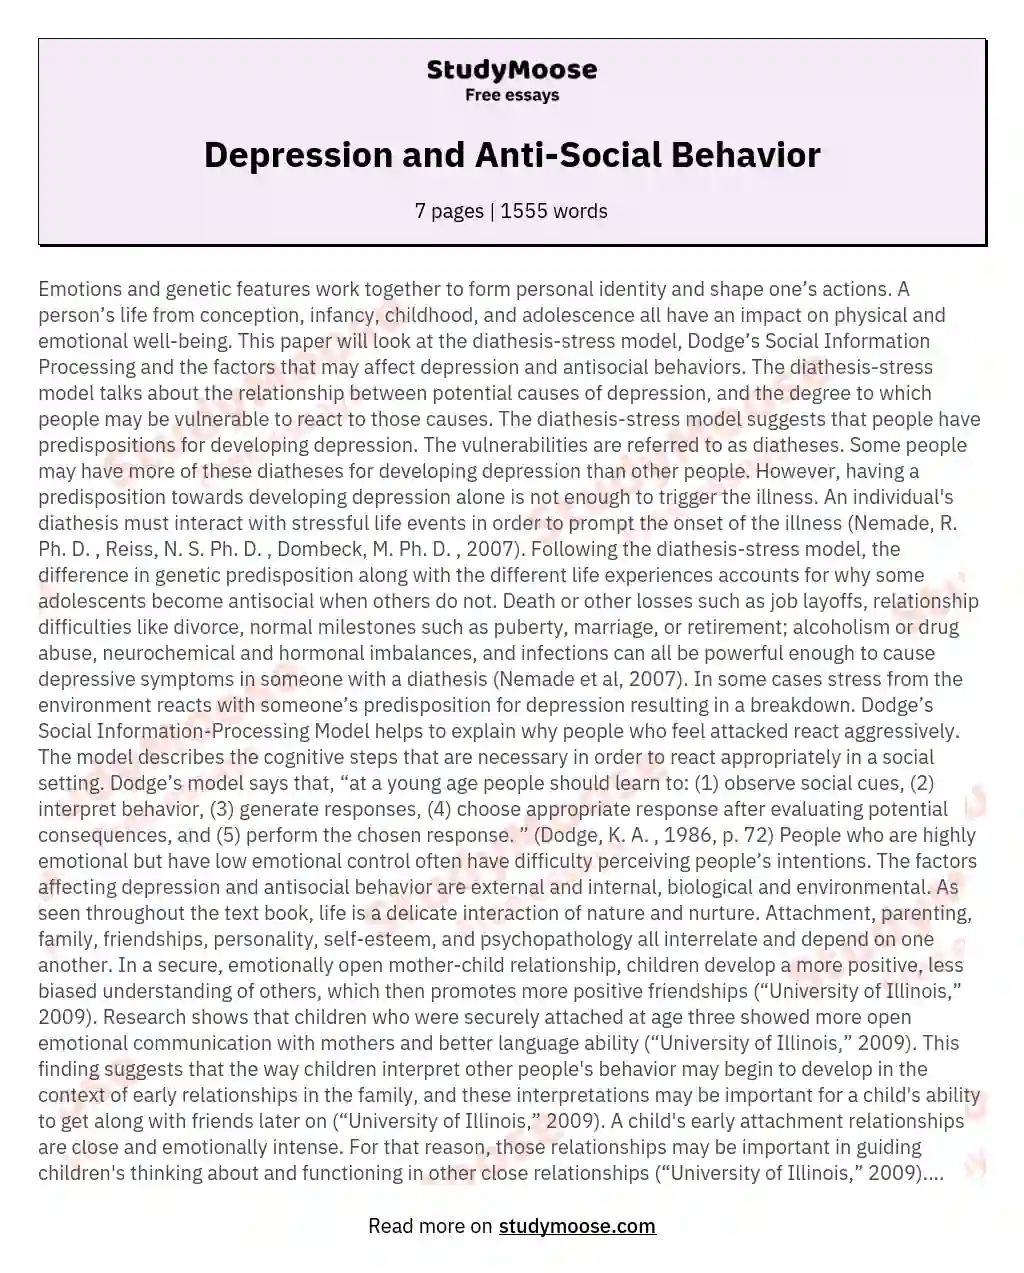 Depression and Anti-Social Behavior essay